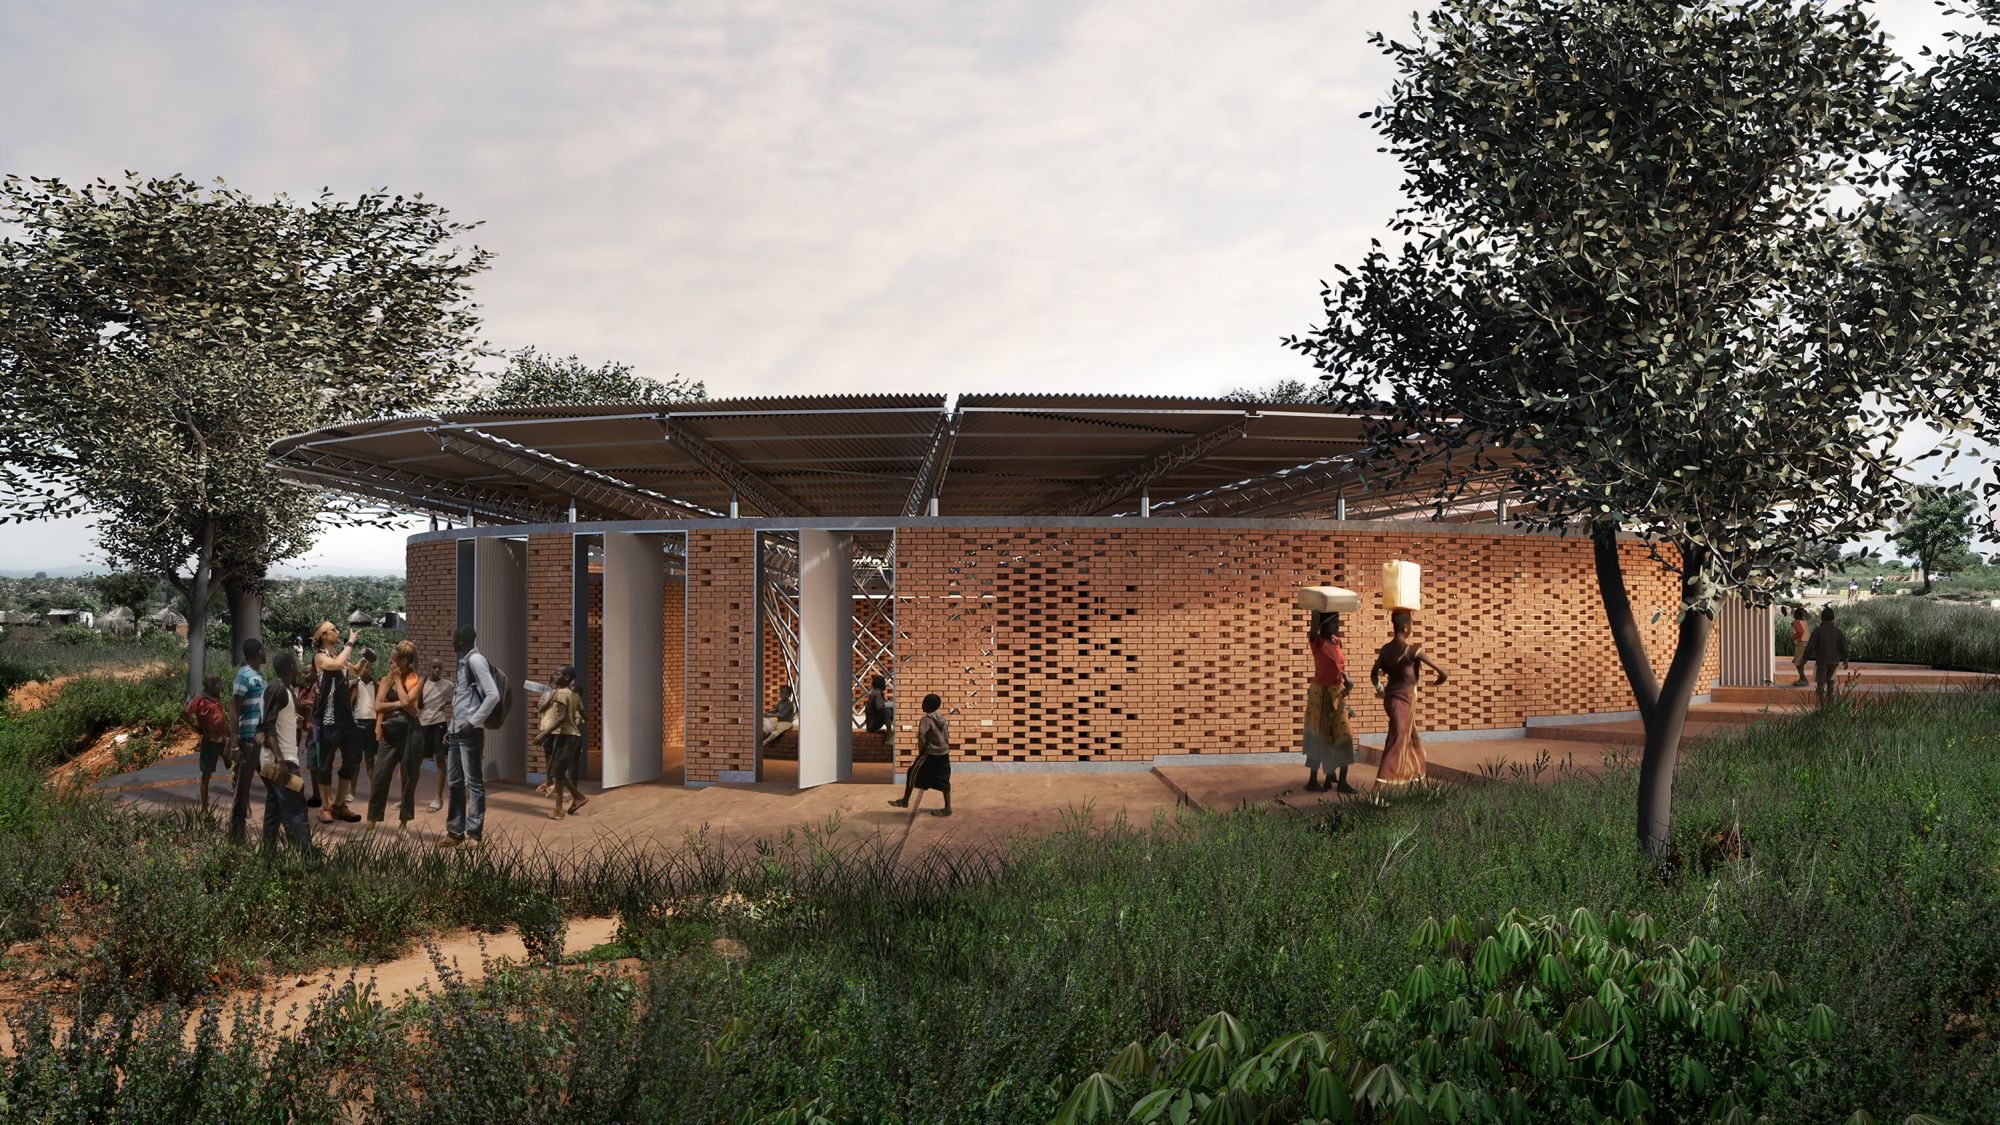 The Bidi Bidi Music & Arts Centre, shown in a digital rendering, will serve refugees who fled South Sudan’s civil war.